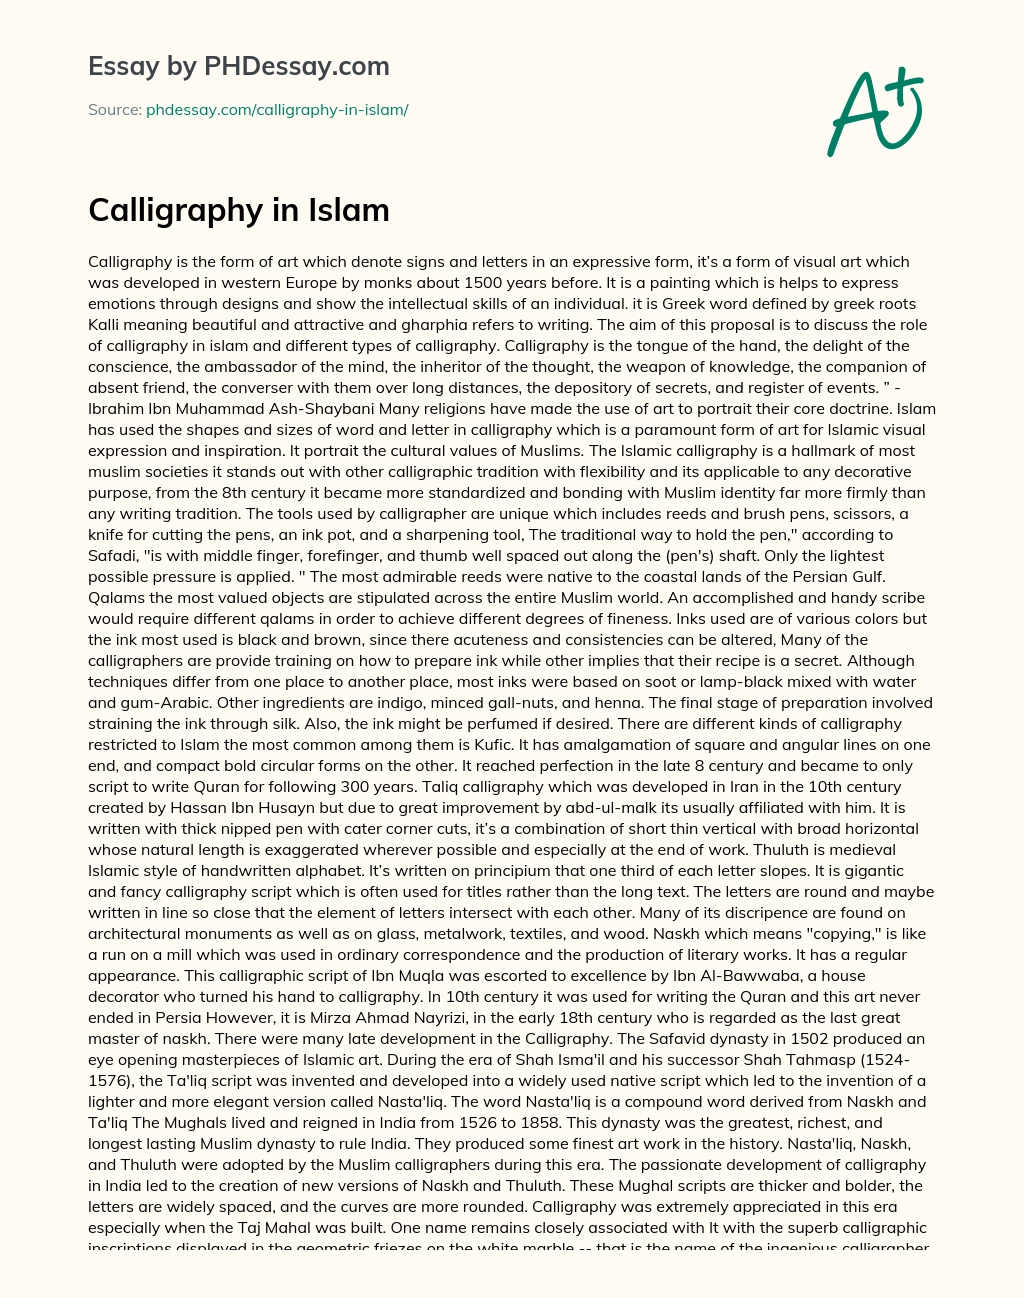 Calligraphy in Islam essay